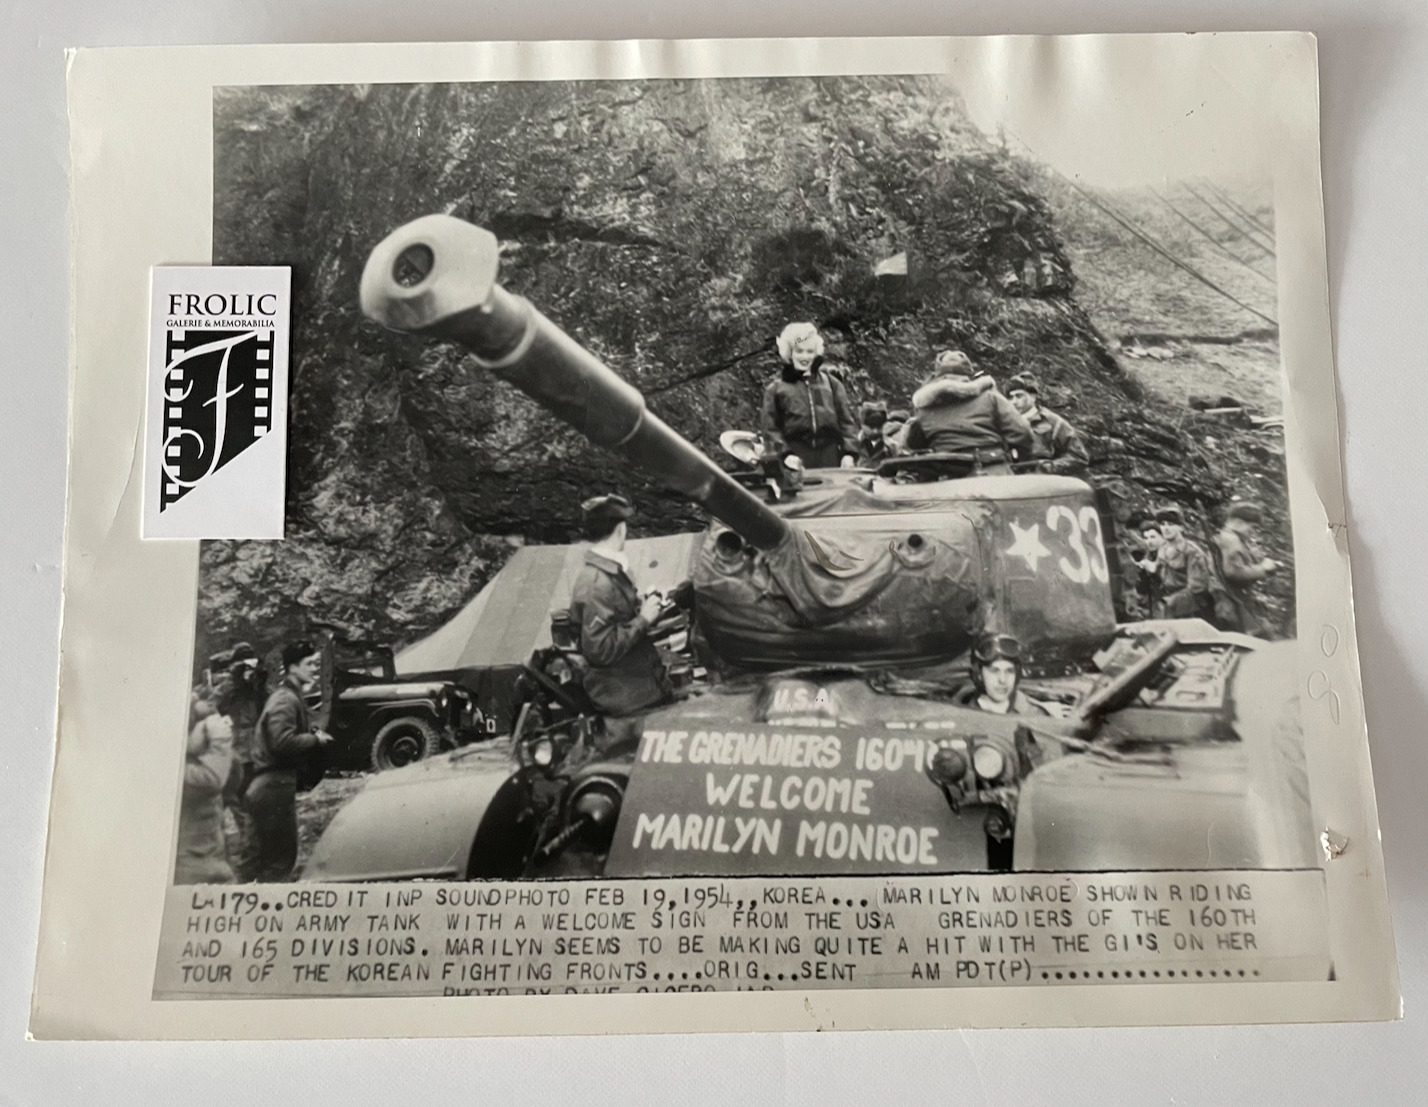 MARILYN MONROE 1954 Riding High Army Tank in Korea original Int News Photo RARE+